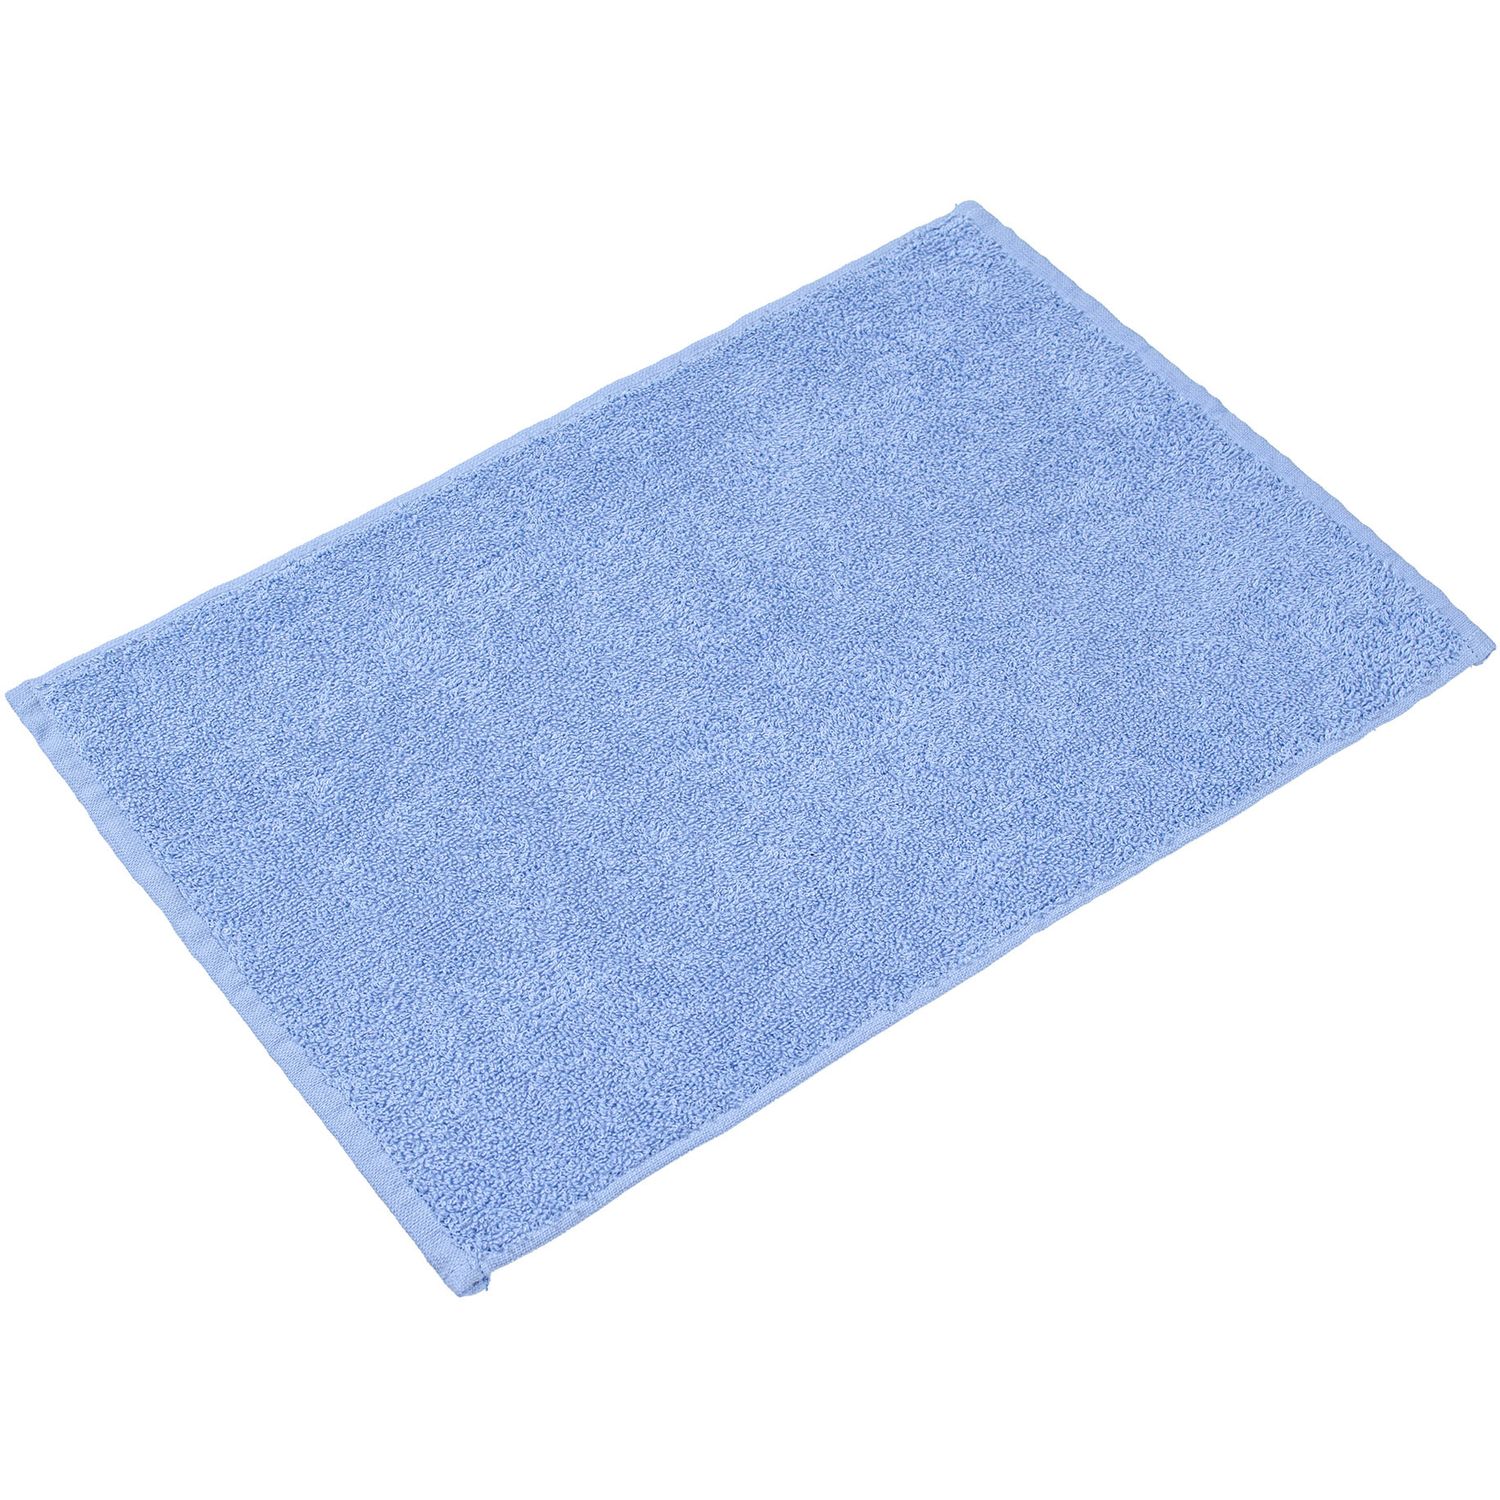 Полотенце (салфетка) Home Line махровое, 45х30 см, синее (174523) - фото 1